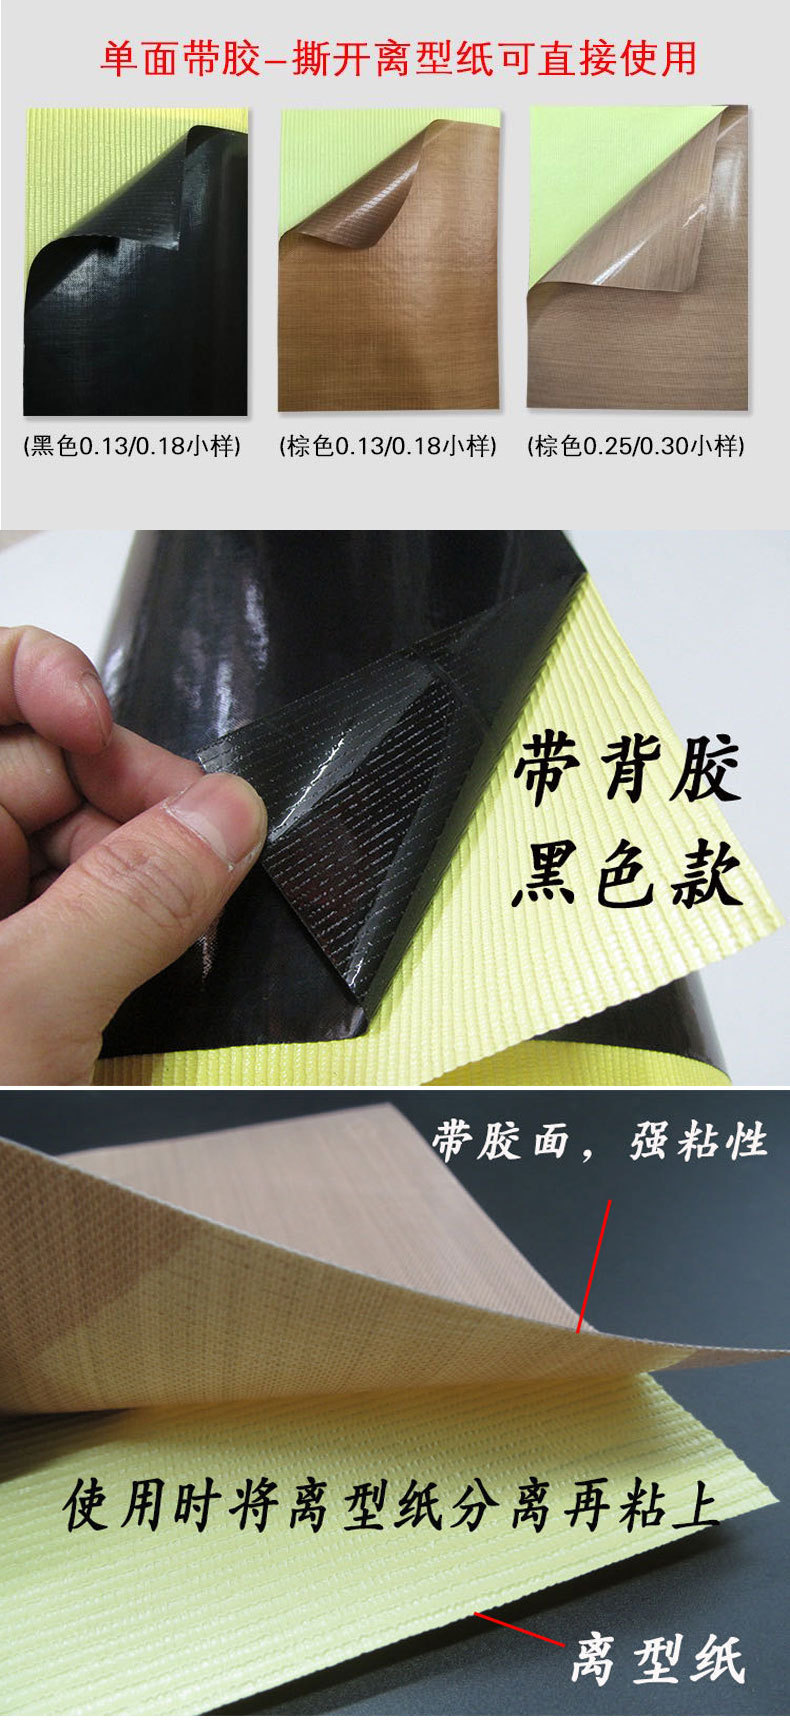 Teflon tape, release paper sealing machine drum, high-temperature resistant Teflon high-temperature adhesive